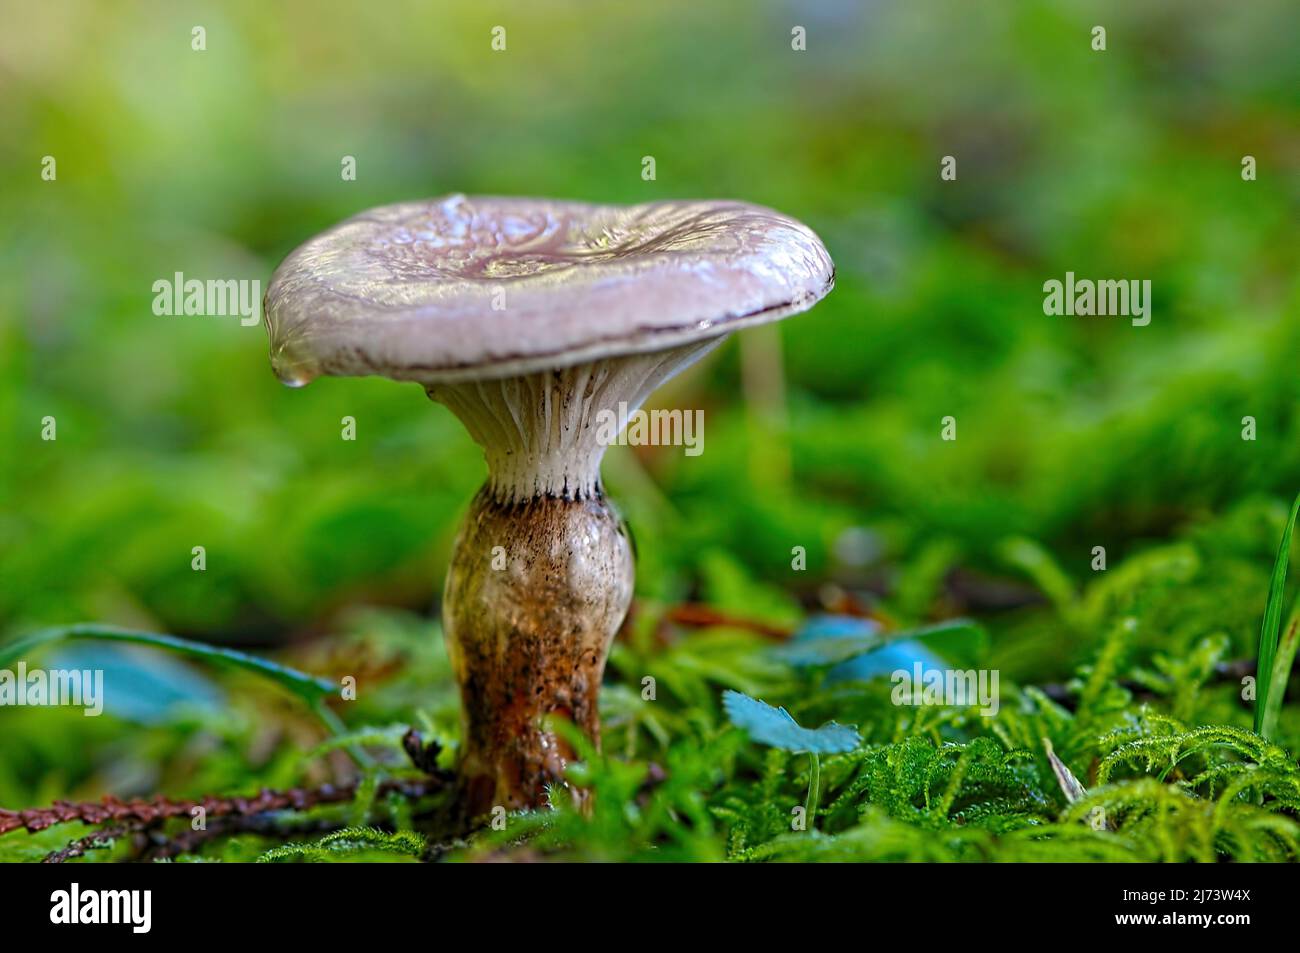 Slimy Spike-cap mushroom (Gomphidius glutinosus) growing in moss on the forest floor. Stock Photo